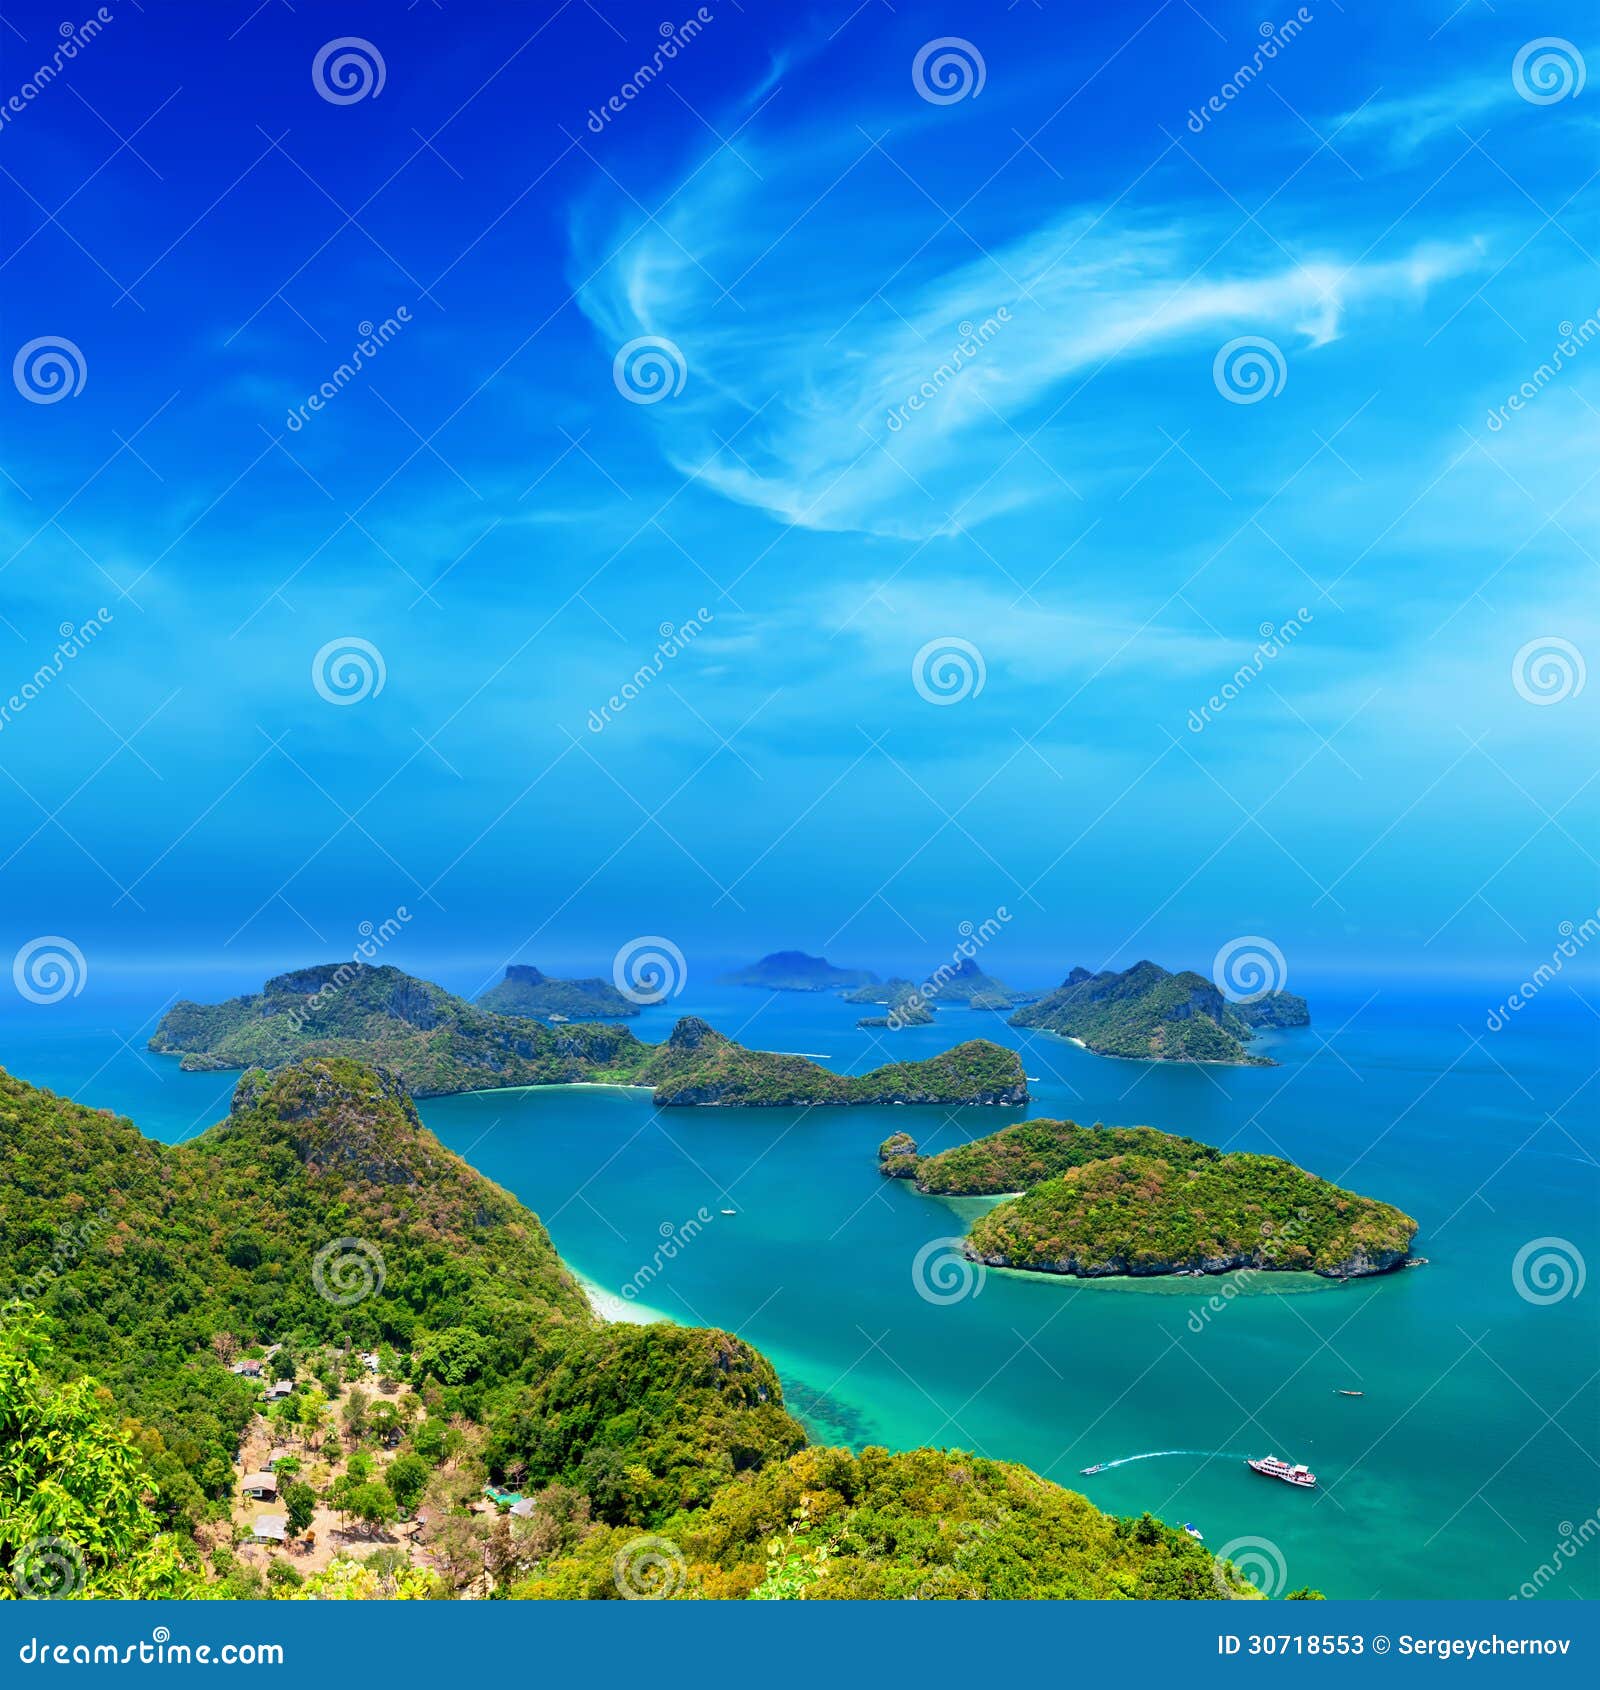 tropical island nature, thailand sea archipelago